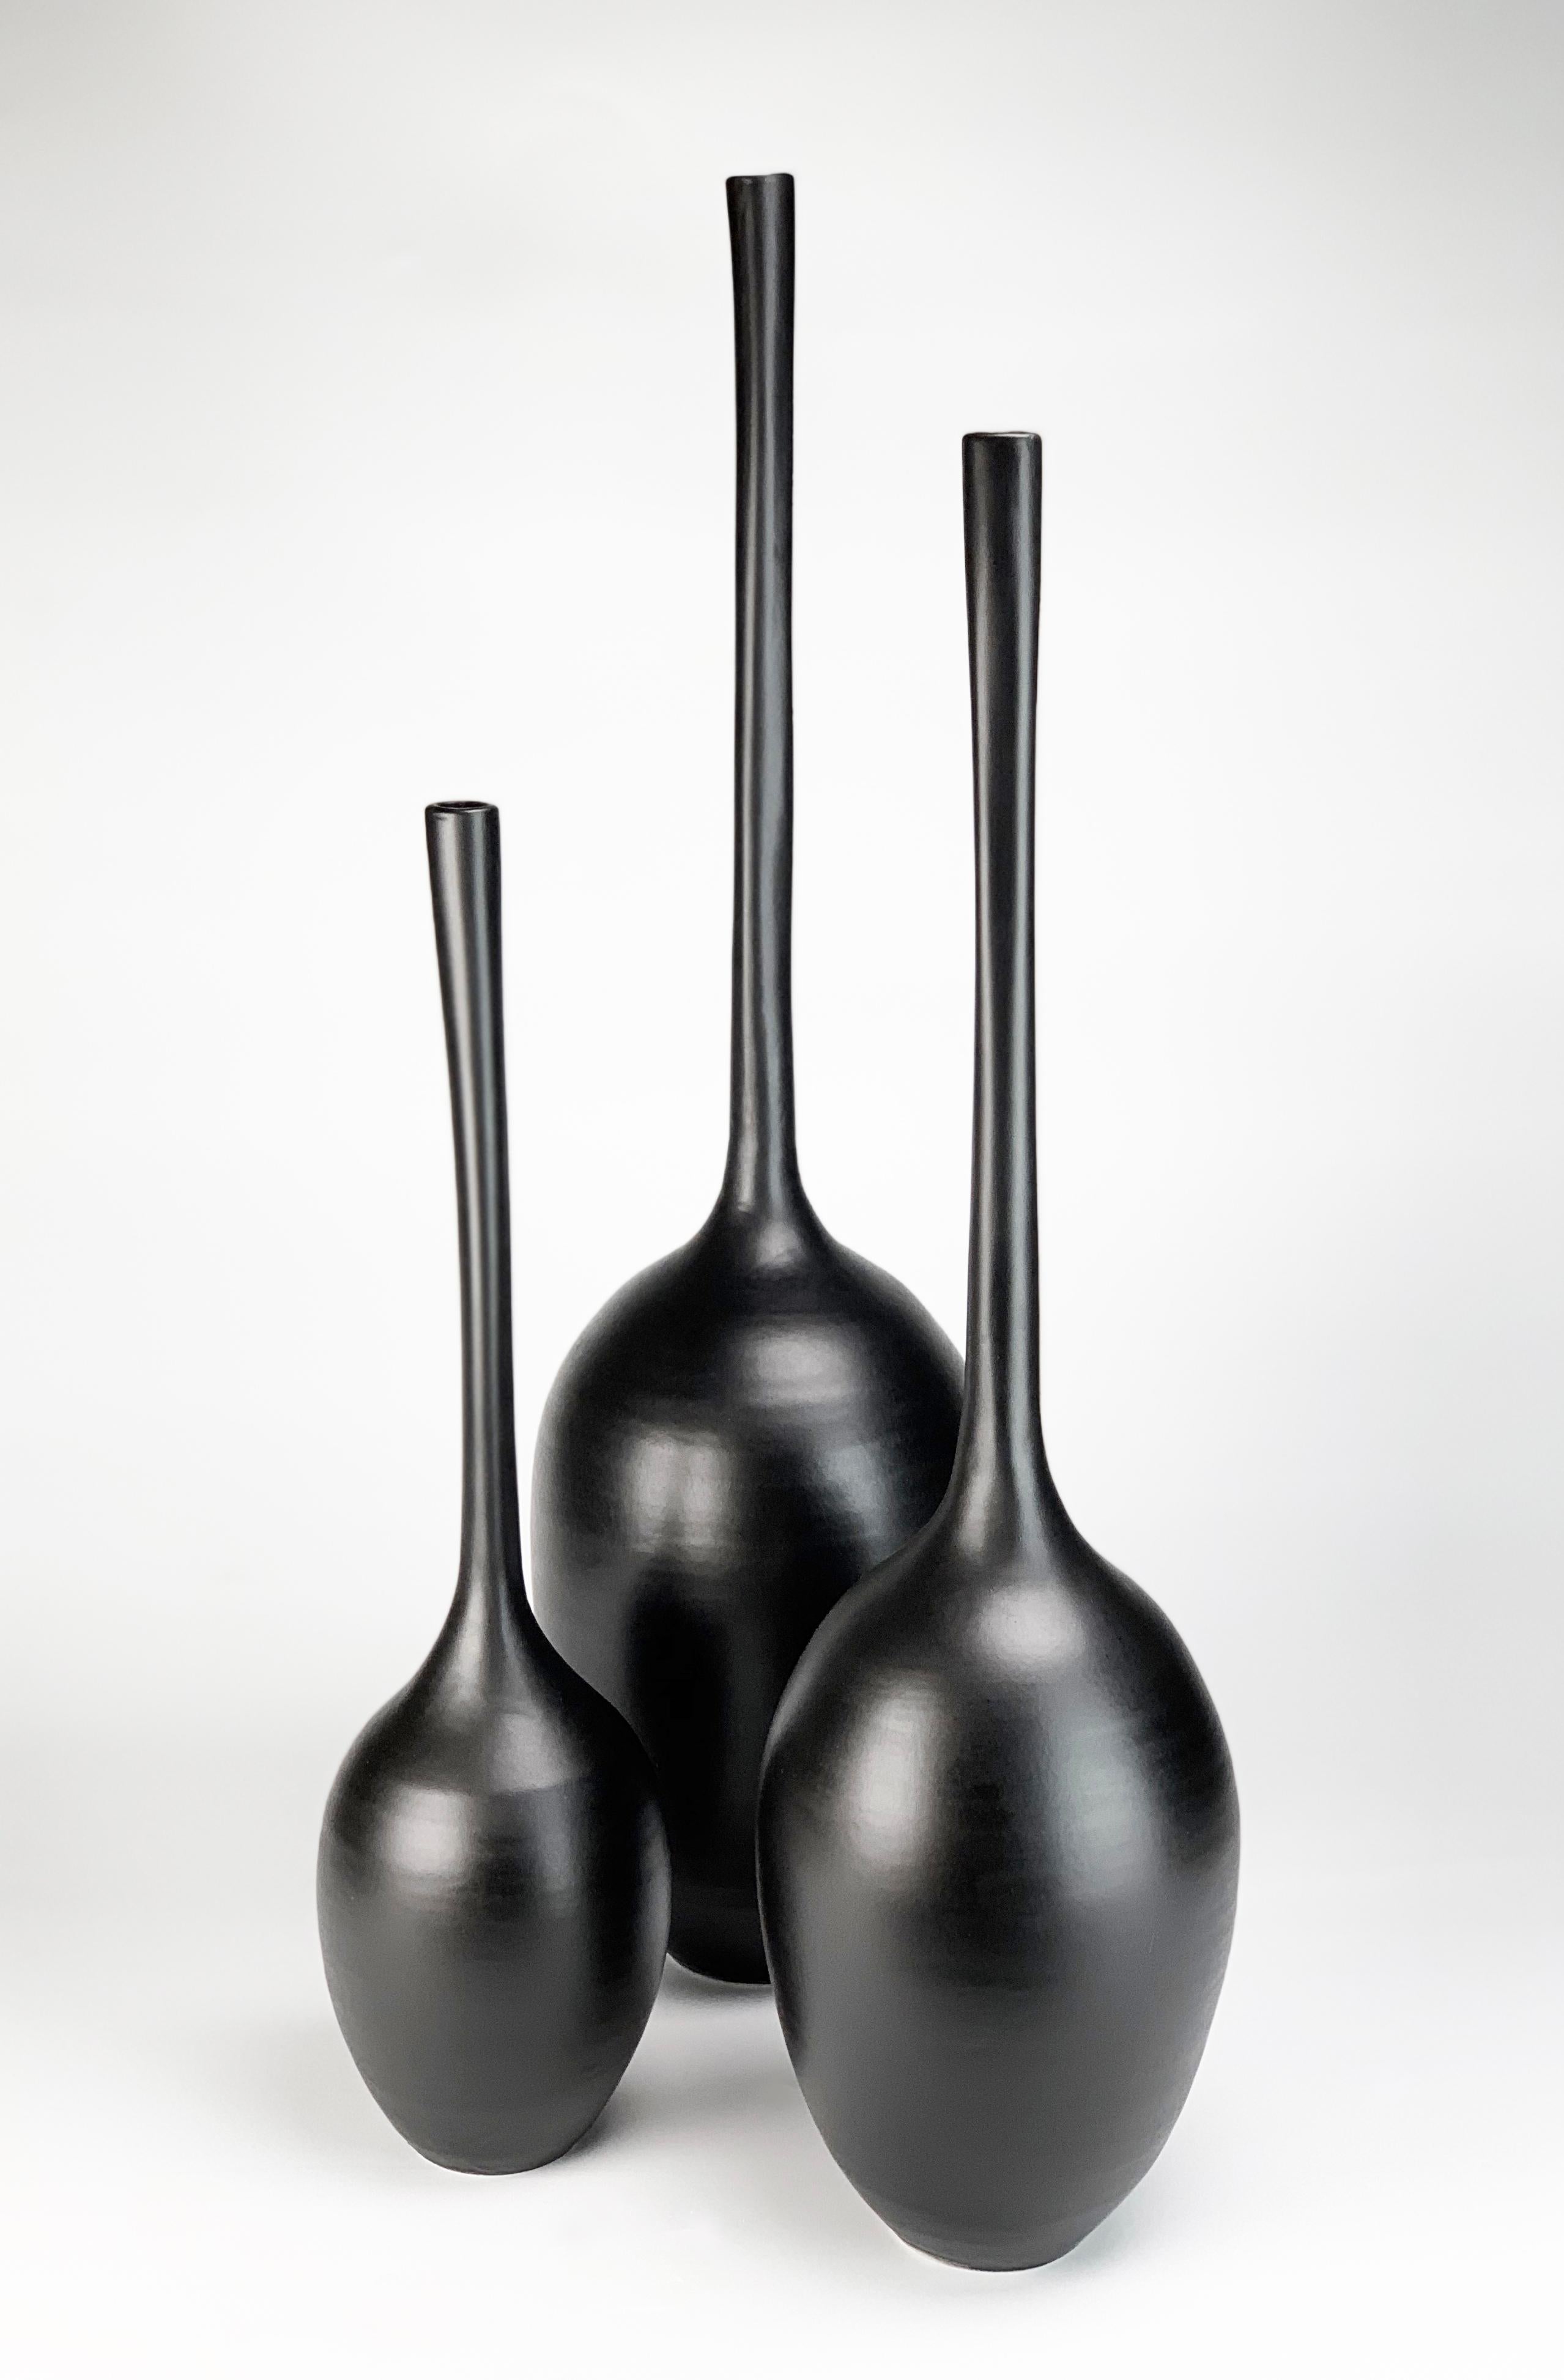 Set of 3 black ceramic gourd sculptures by Michael Boroniec - ceramic, glaze  

Dimensions: (approx.)
Left. 21.5 x 6 x 6 in 
Center. 24.5 x 6.5 x 6.5 in 
Right: 23 x 5.25 x 5.25 in  

Michael Boroniec’s 